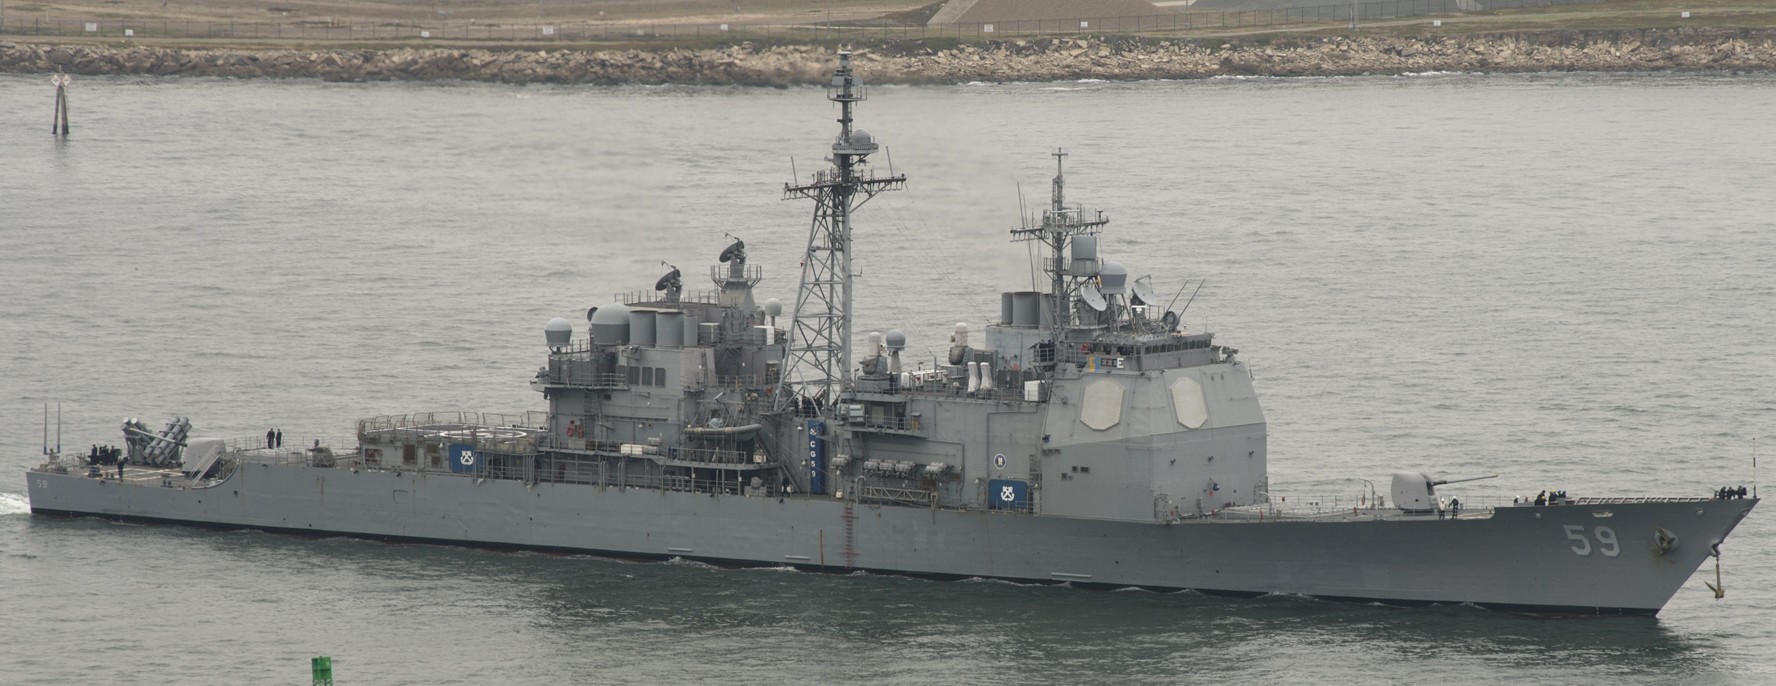 cg-59 uss princeton ticonderoga class guided missile cruiser aegis us navy naval base san diego 70